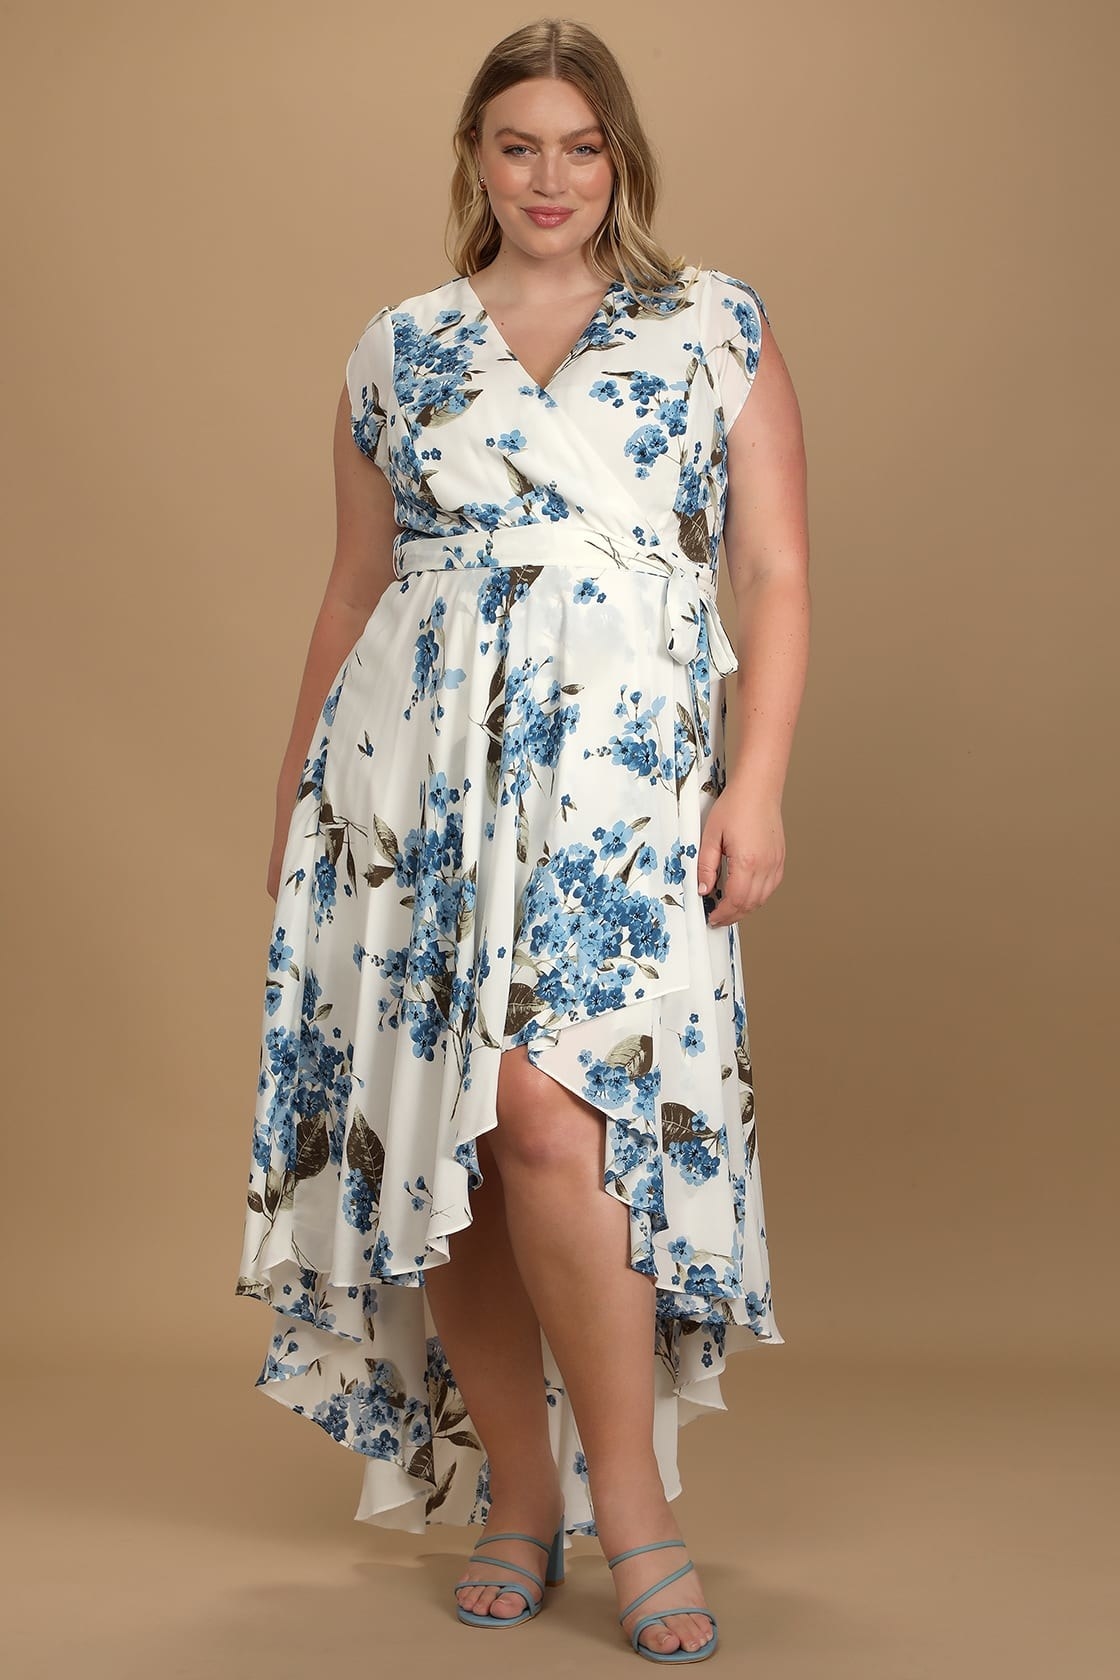 model wearing floral print high low dress